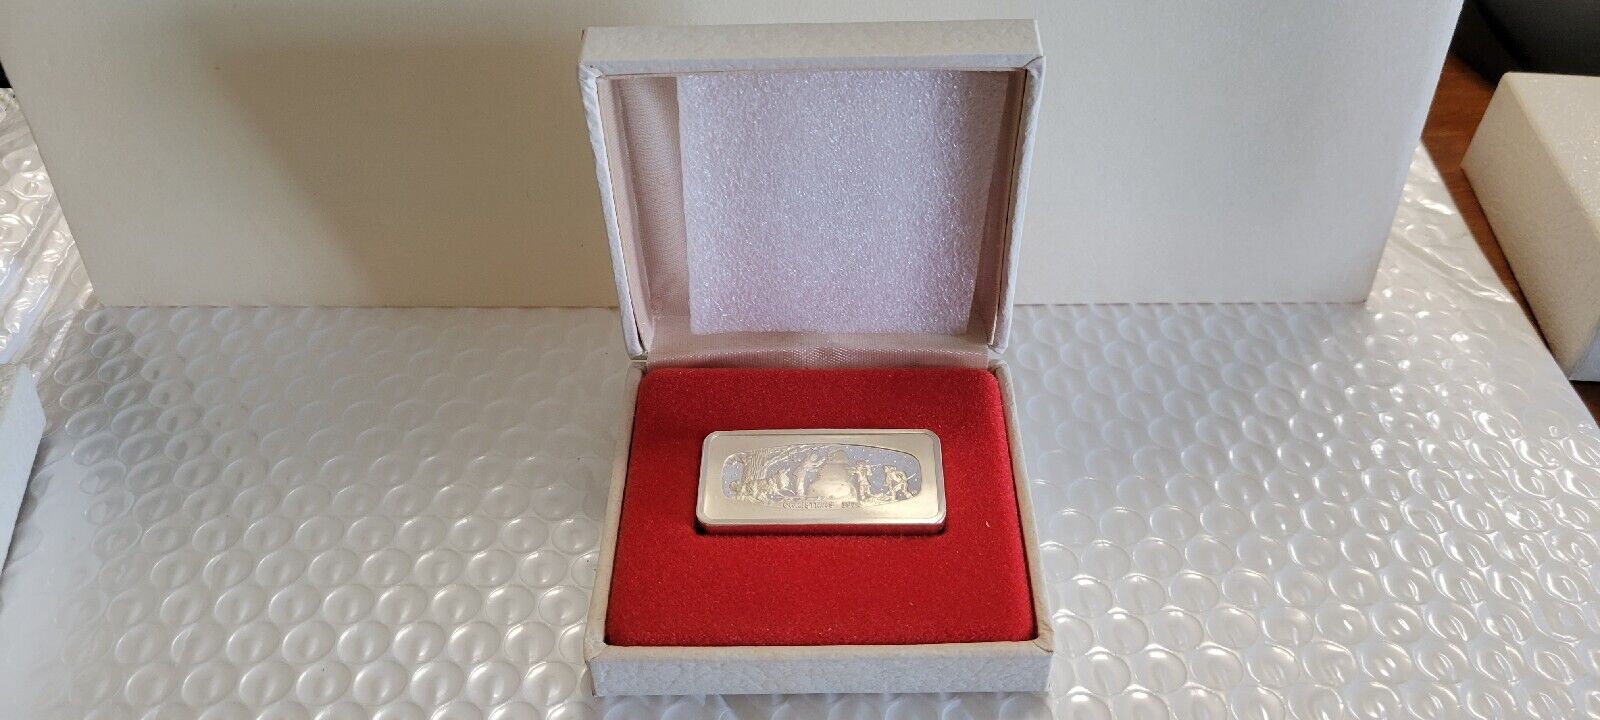 1974 Franklin Mint Christmas Ingot “The SNOWMAN” – 500 Grains Sterling Silver 